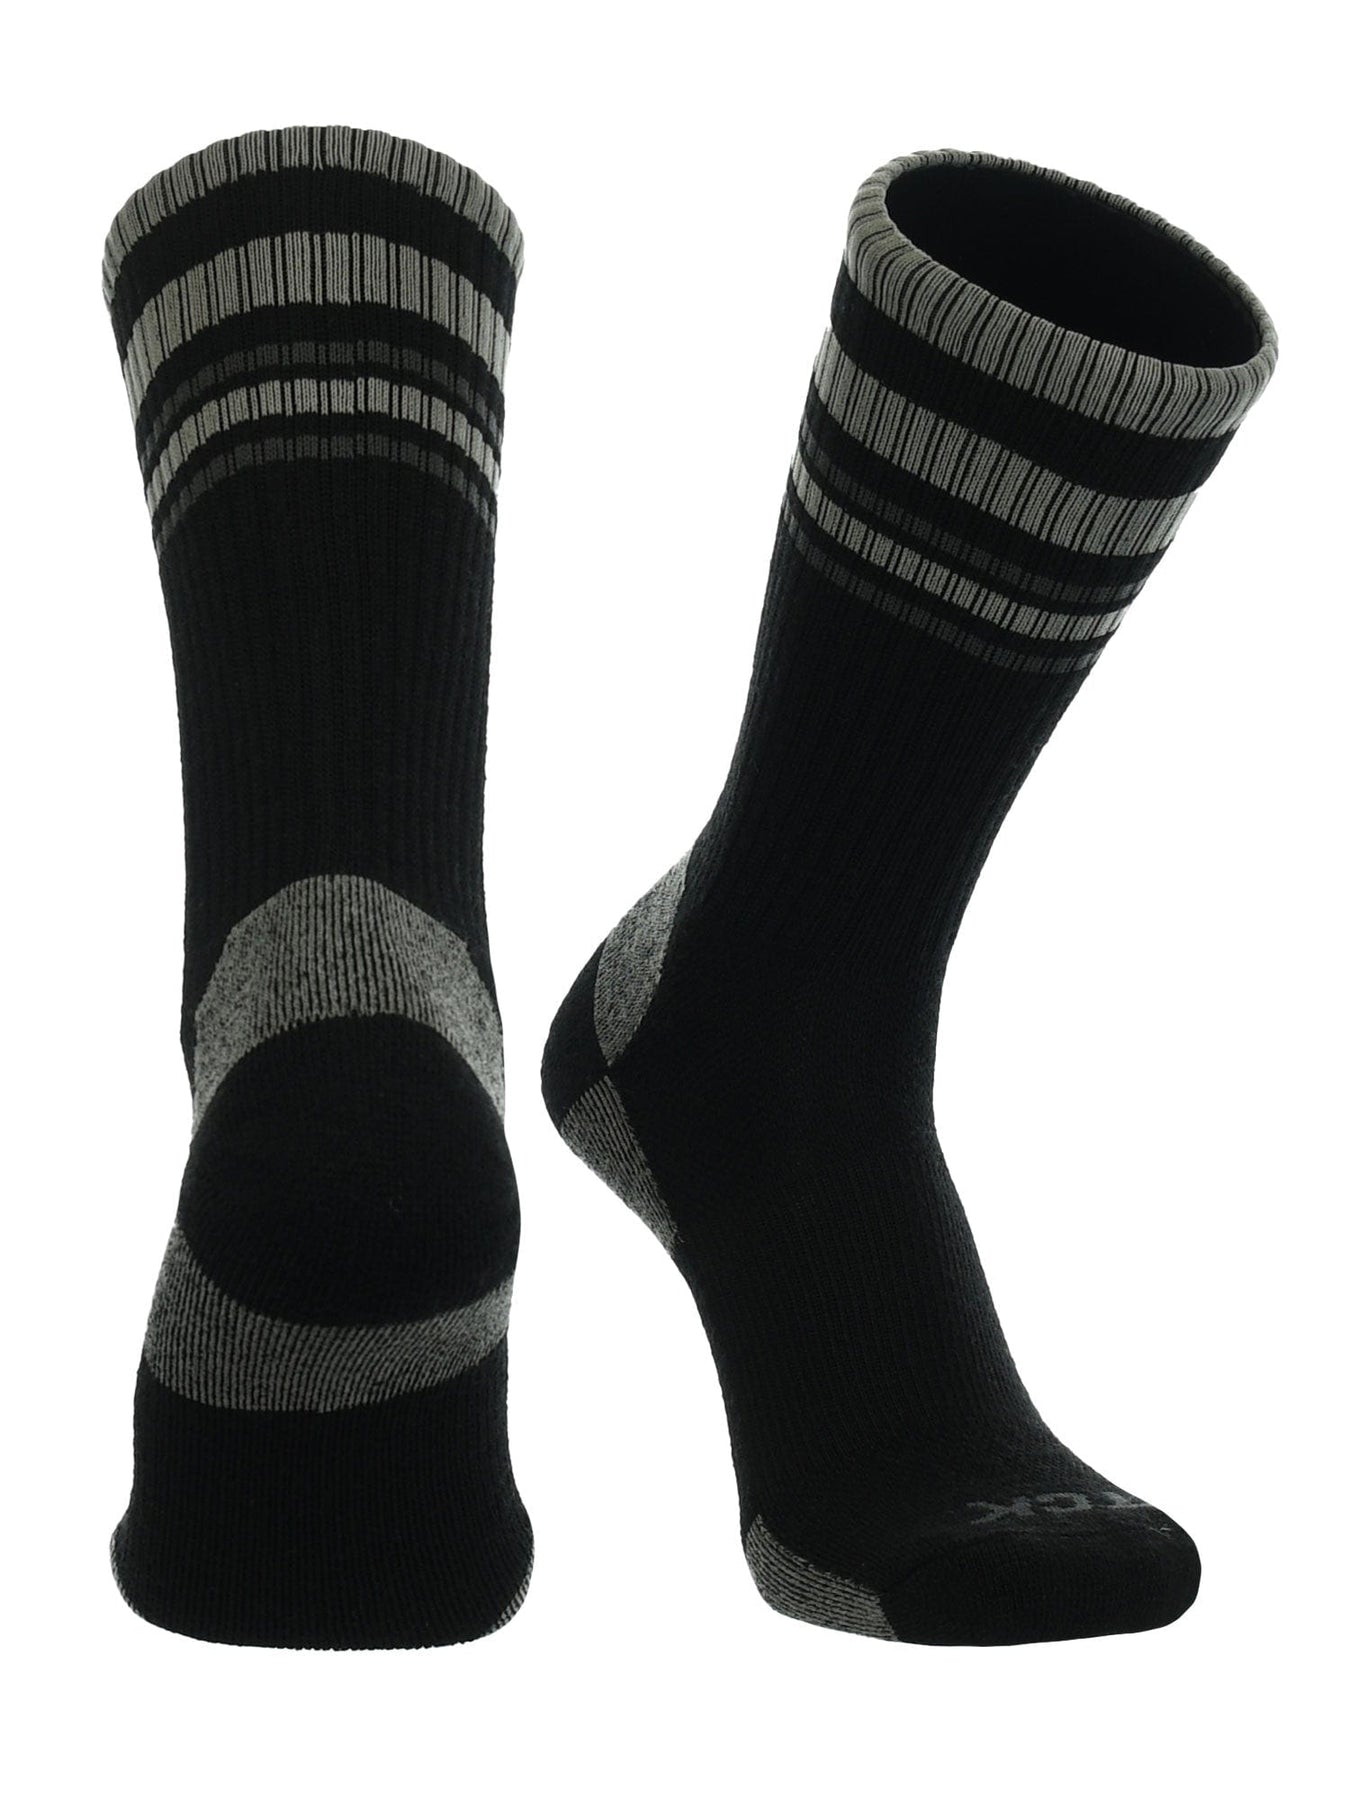 TCK Black/Grey / X-Large Striped Merino Wool Hiking Socks For Men & Women